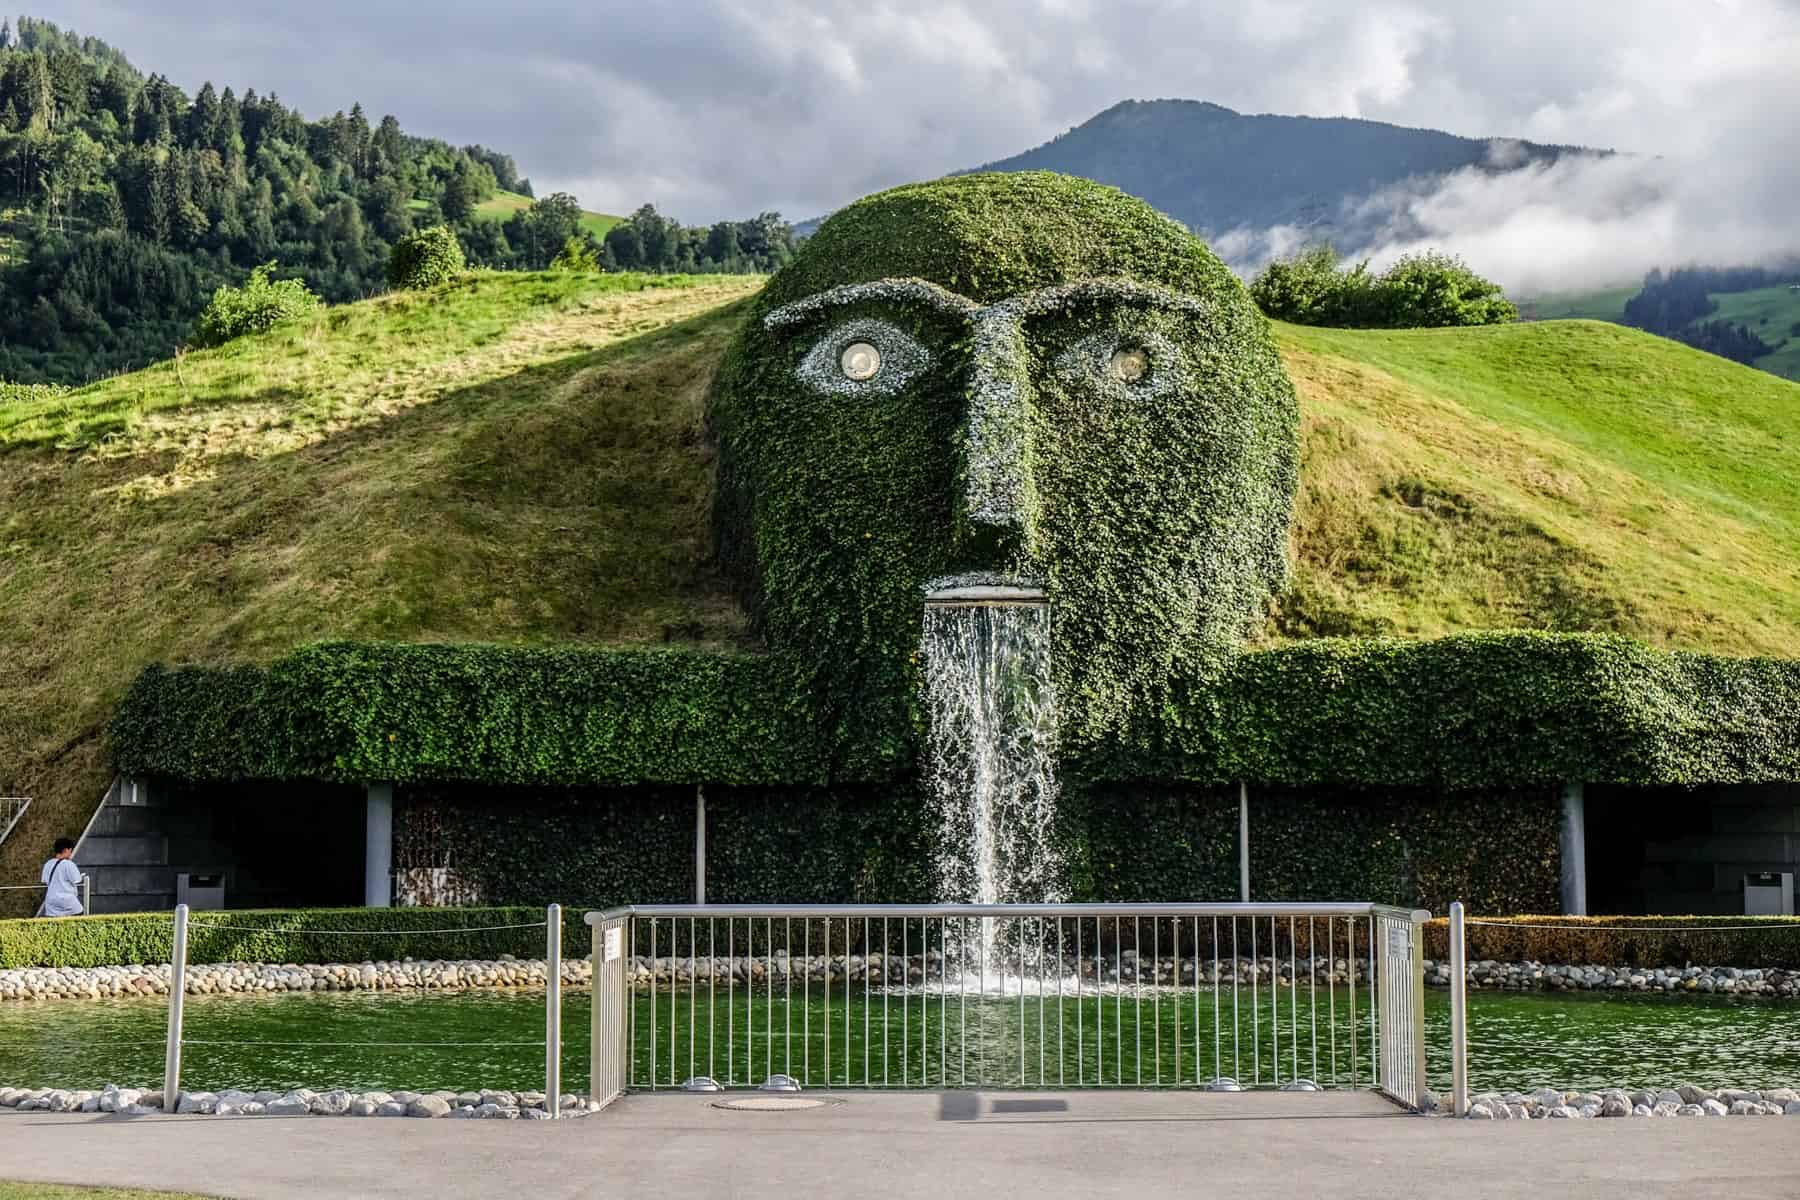 The manicured grass face of the Swarovski Crystal Worlds in Innsbruck, Austria